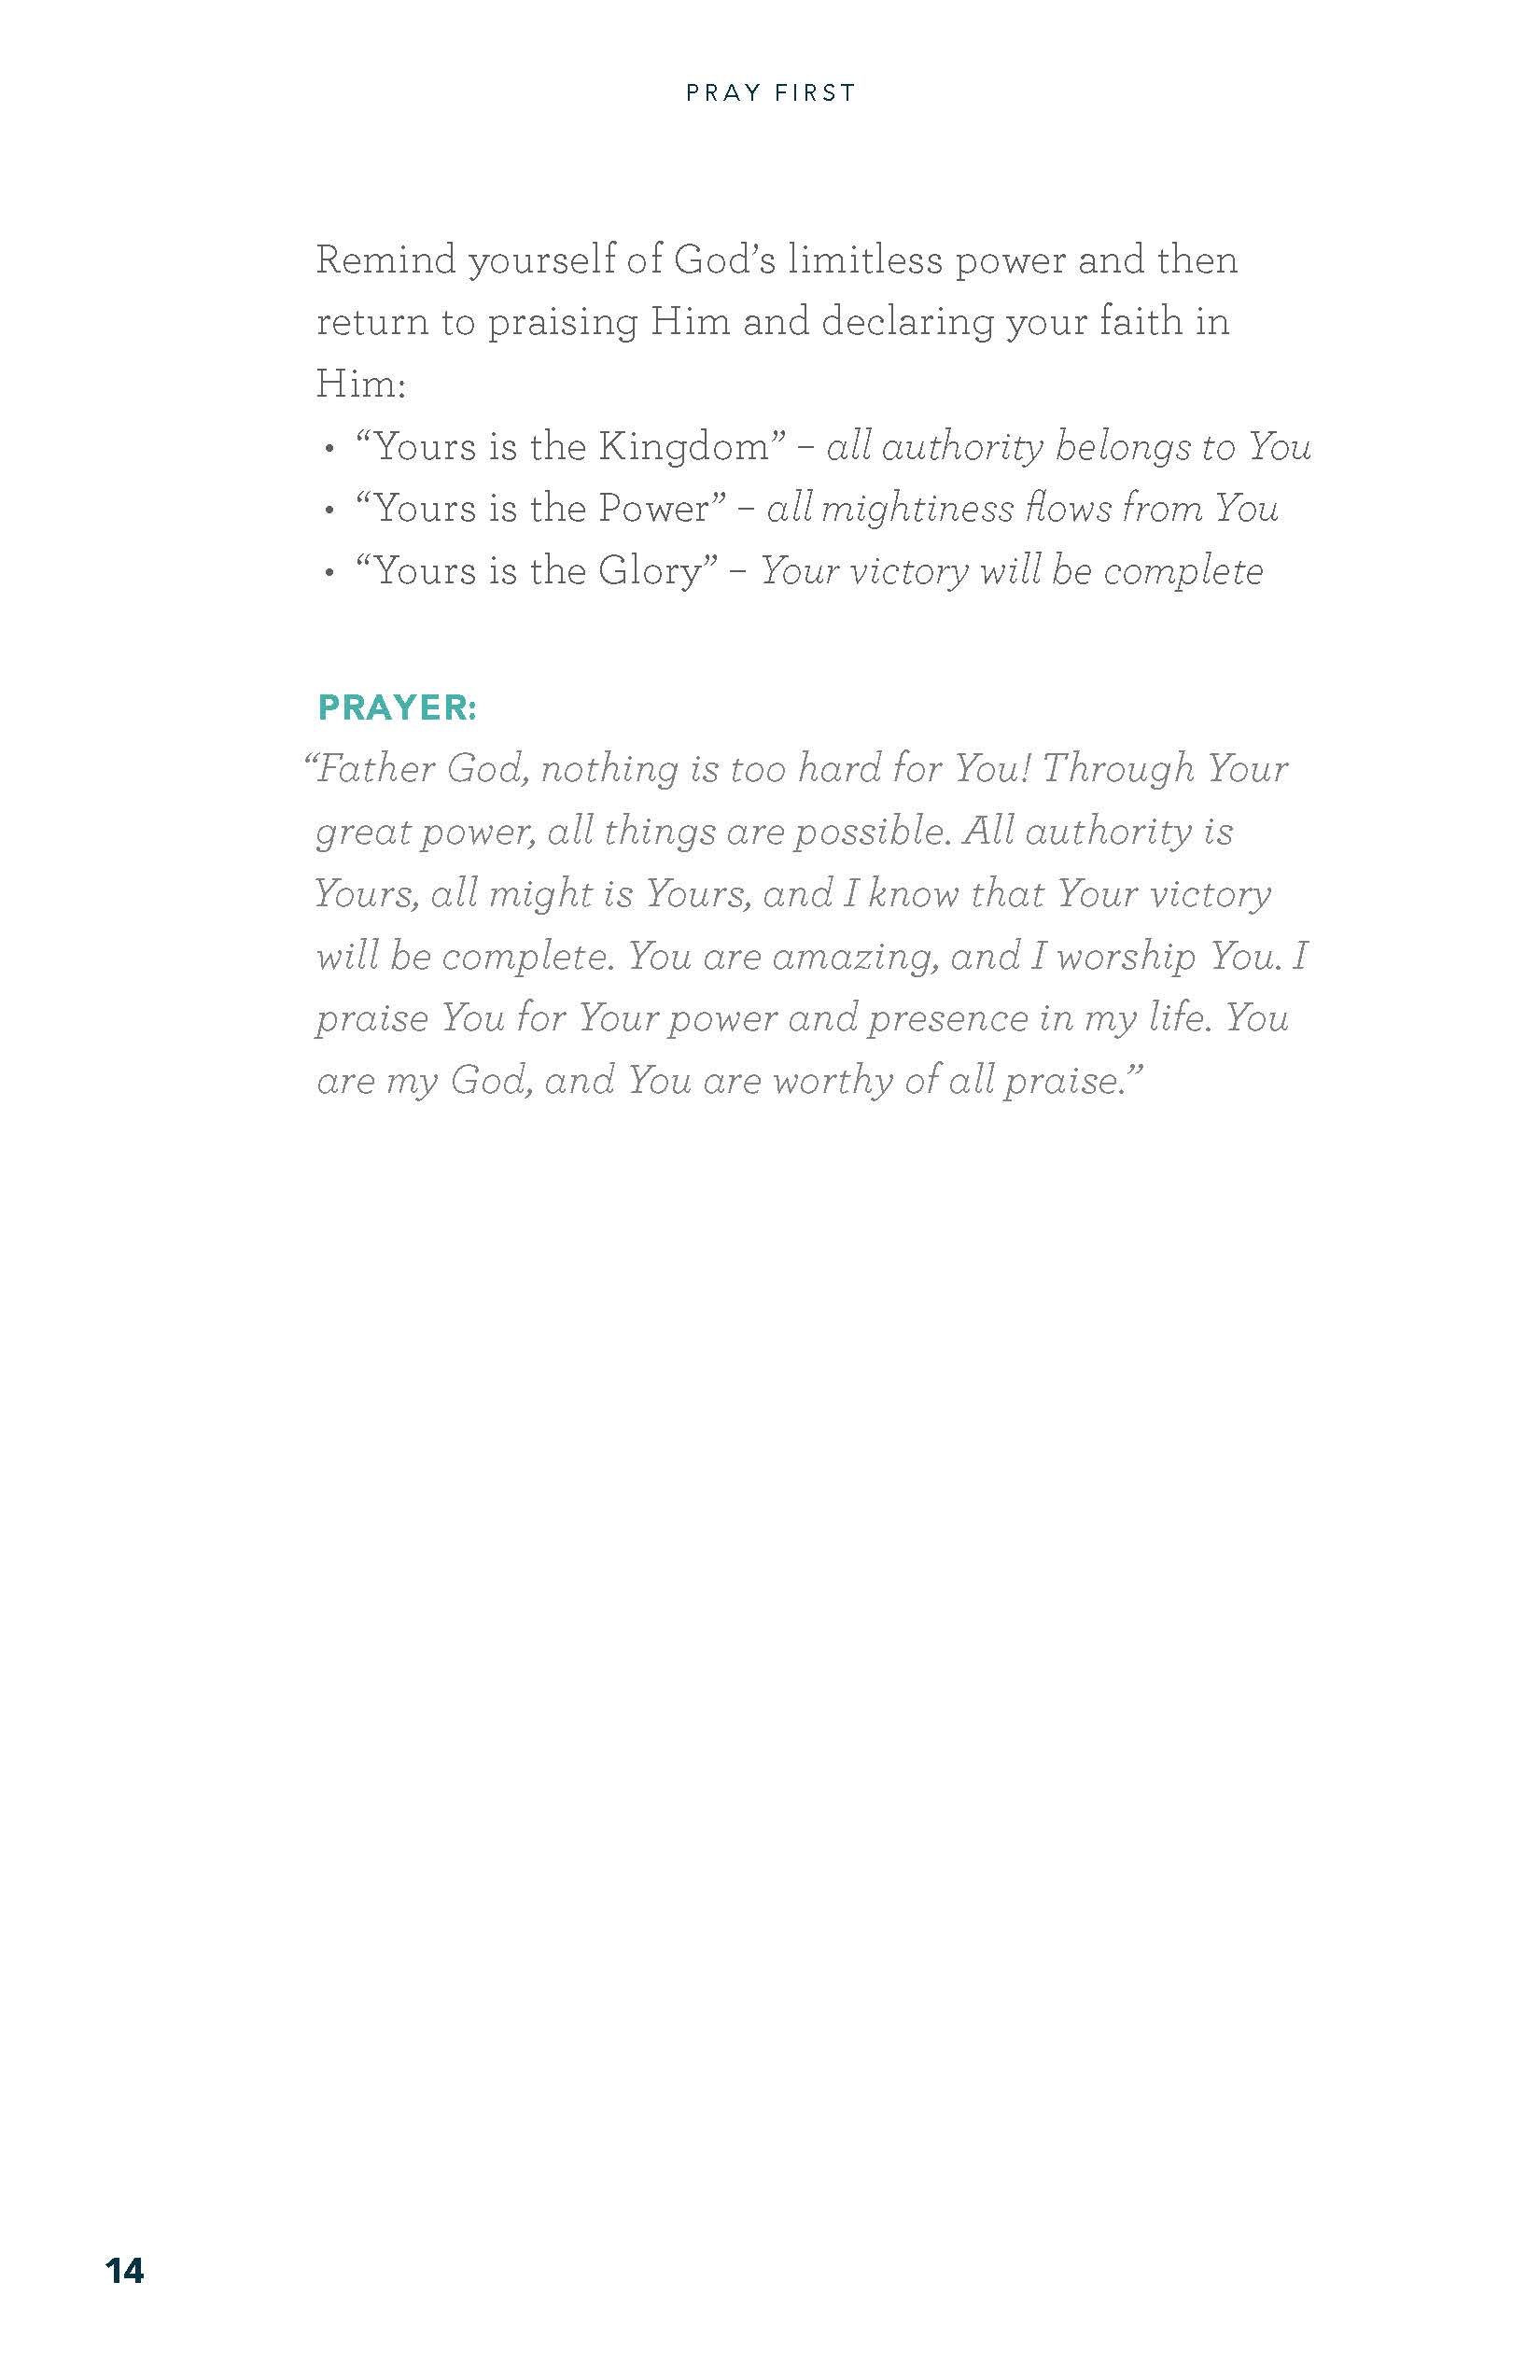 PrayFirst_Book_Fall 2020_V1_Master_Page_14